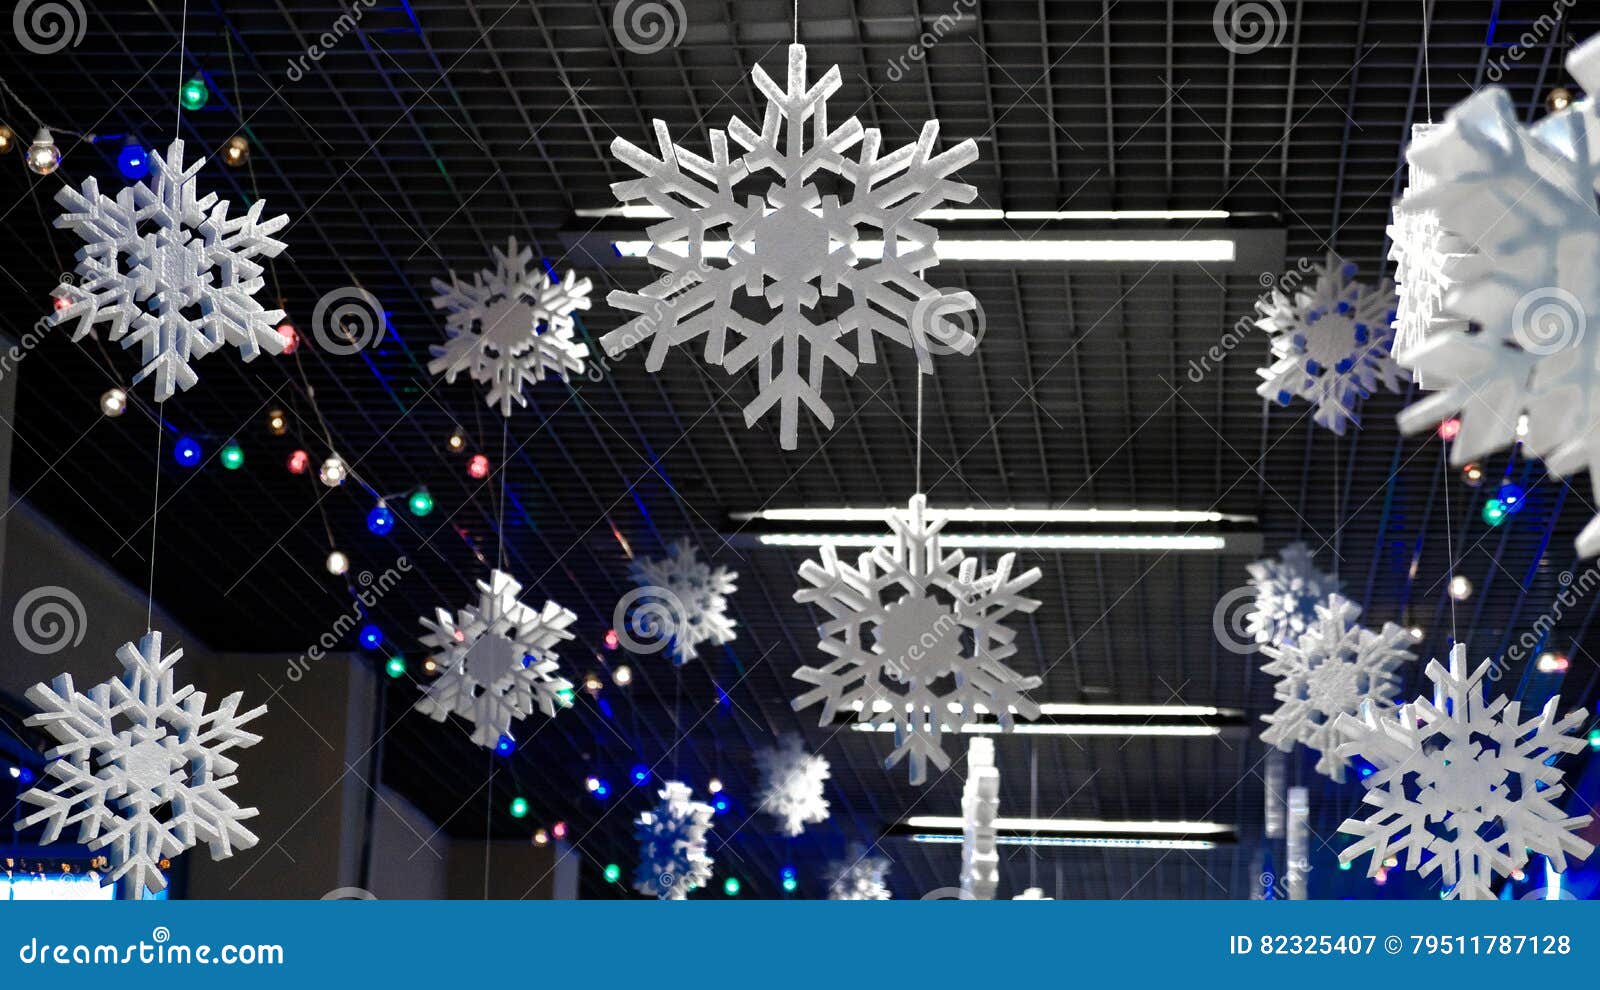 Platinum Tinsel Snowflake: Unique Glittered Winter Snowflake  DecorationPlatt Designs